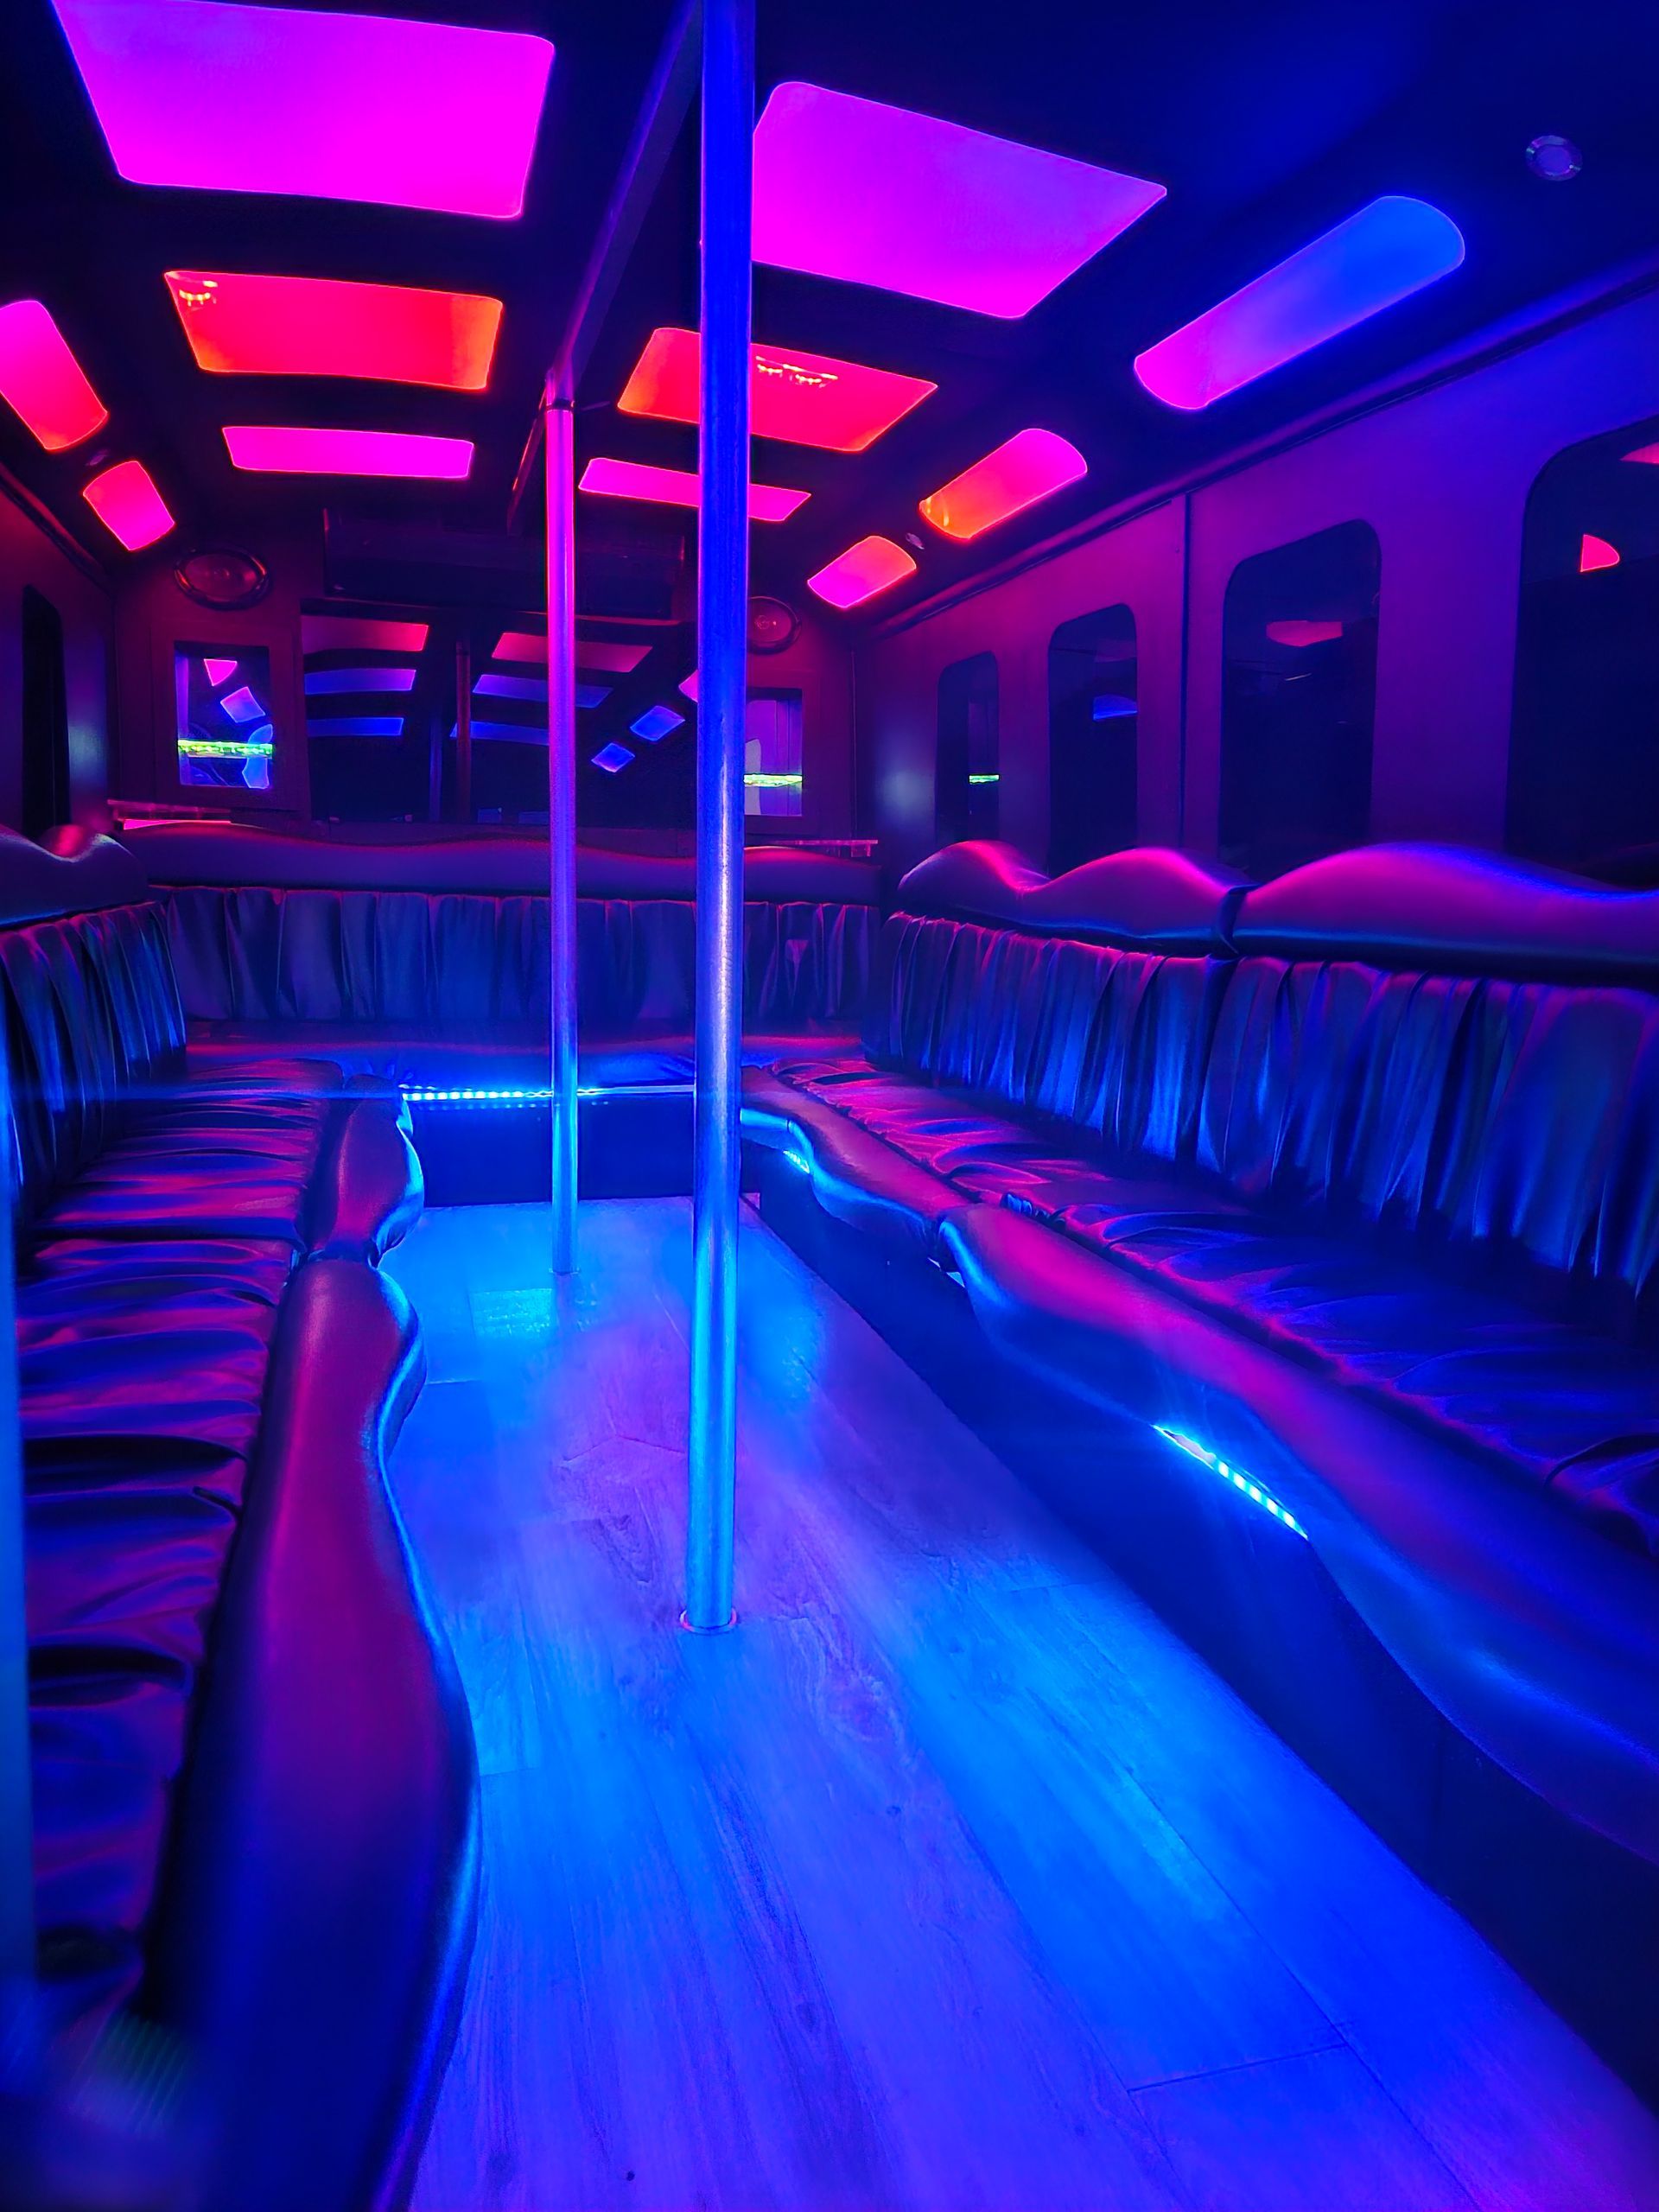 SATX San Antonio party bus interior view for up to 20 passengers